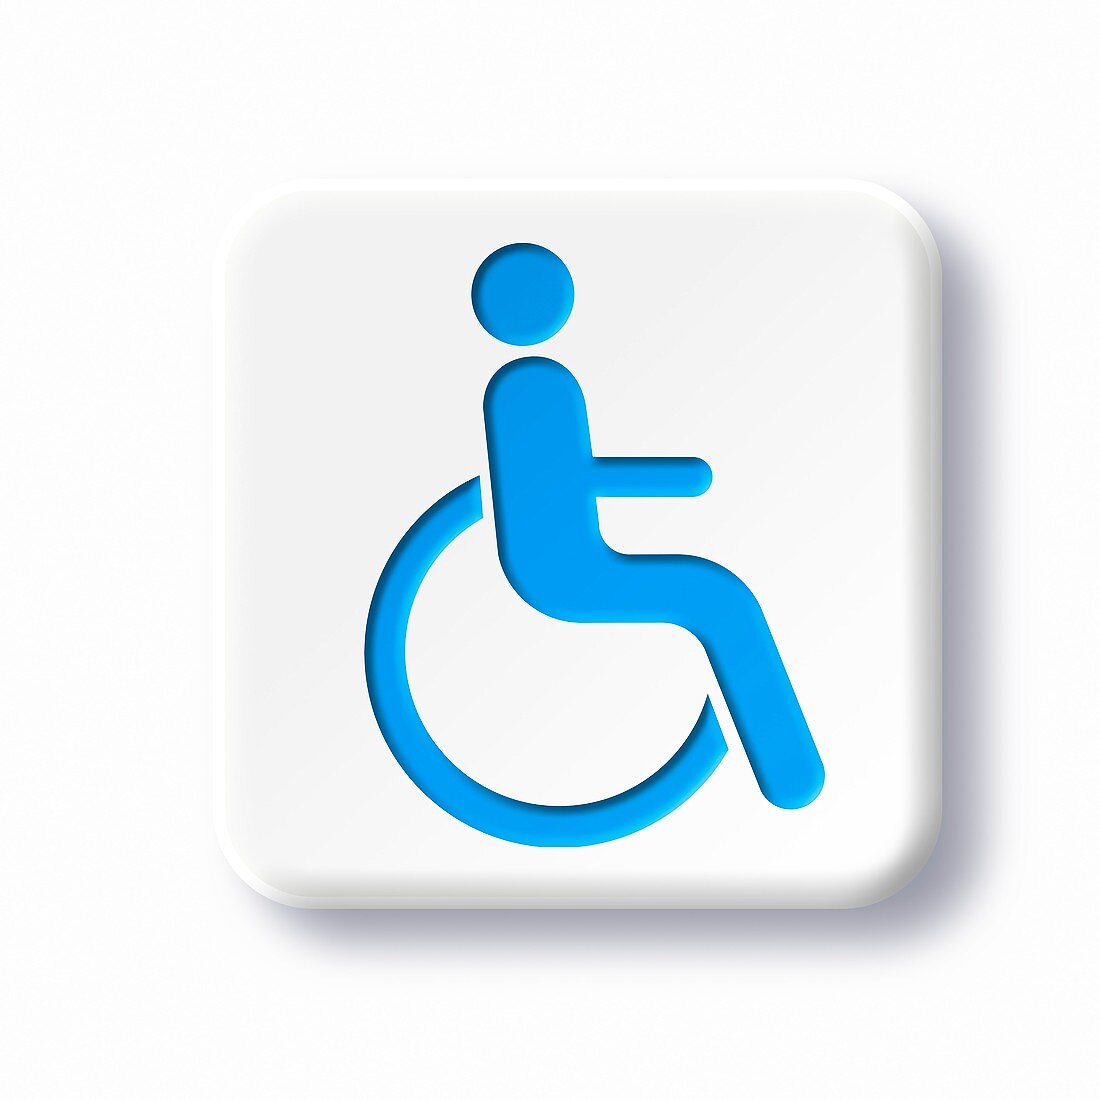 Wheelchair symbol,artwork